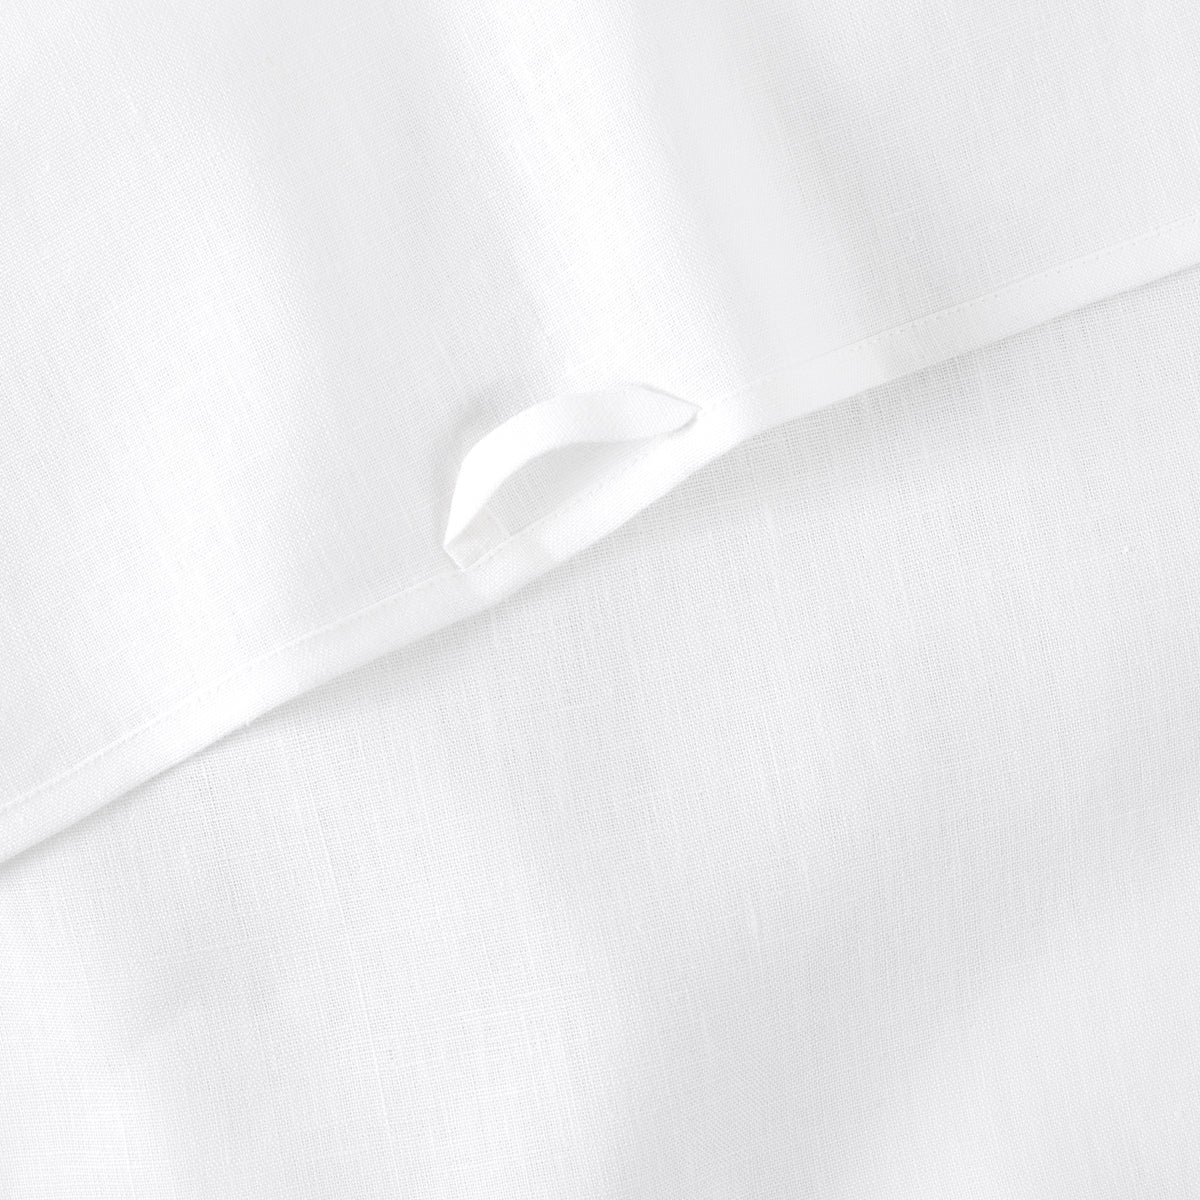 100% Polyester Linen Plain White Tea Towel Soft Blank Kitchen